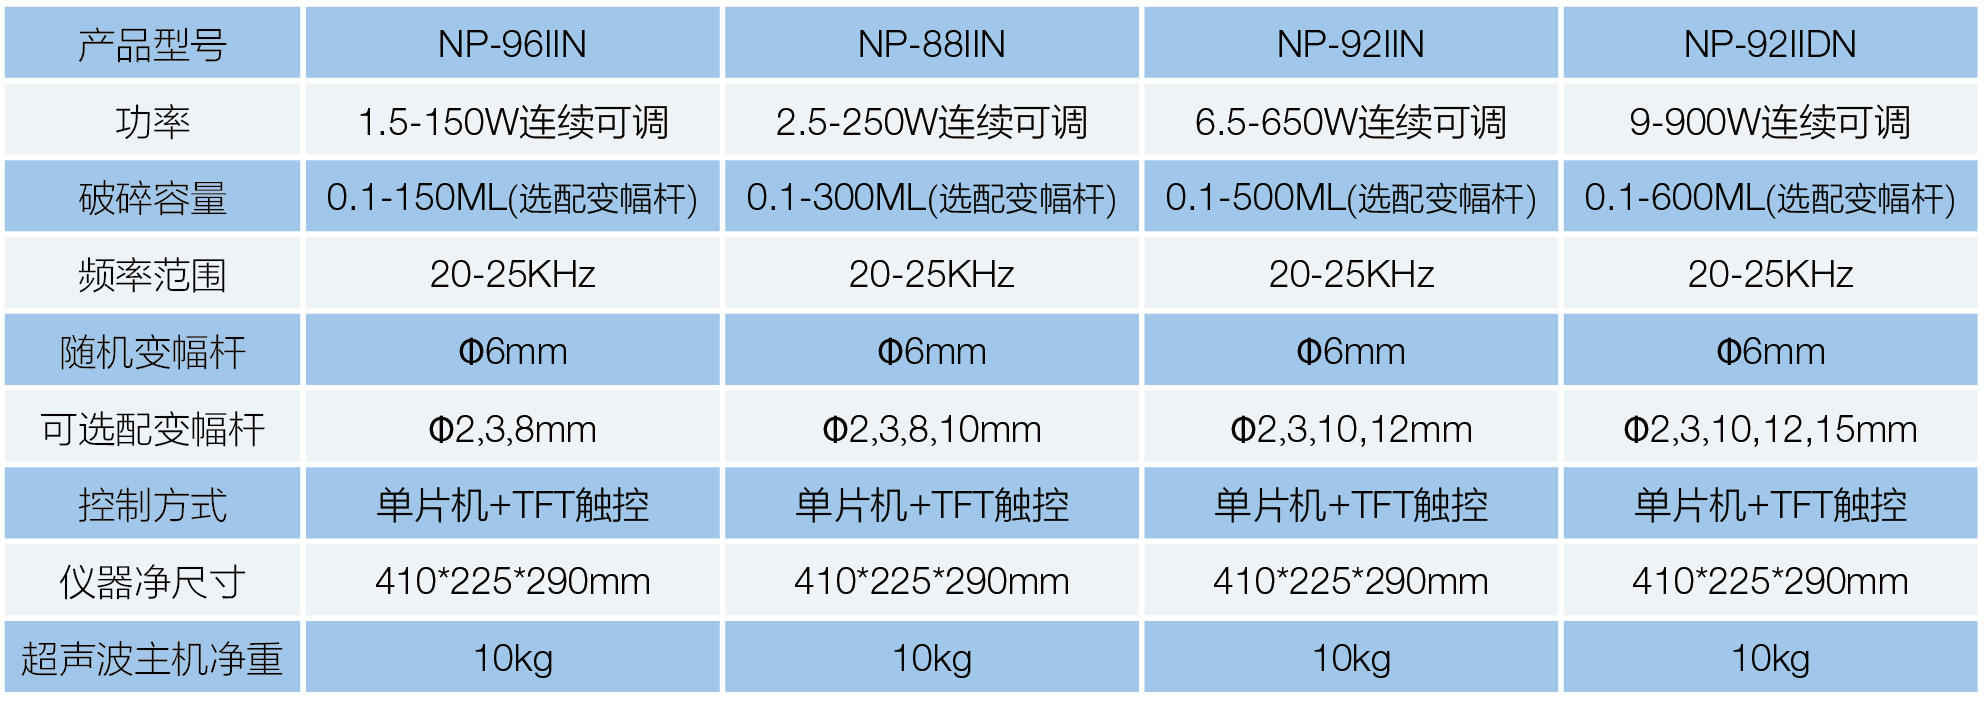 NP-88IIN 超声波细胞破损机(图1)